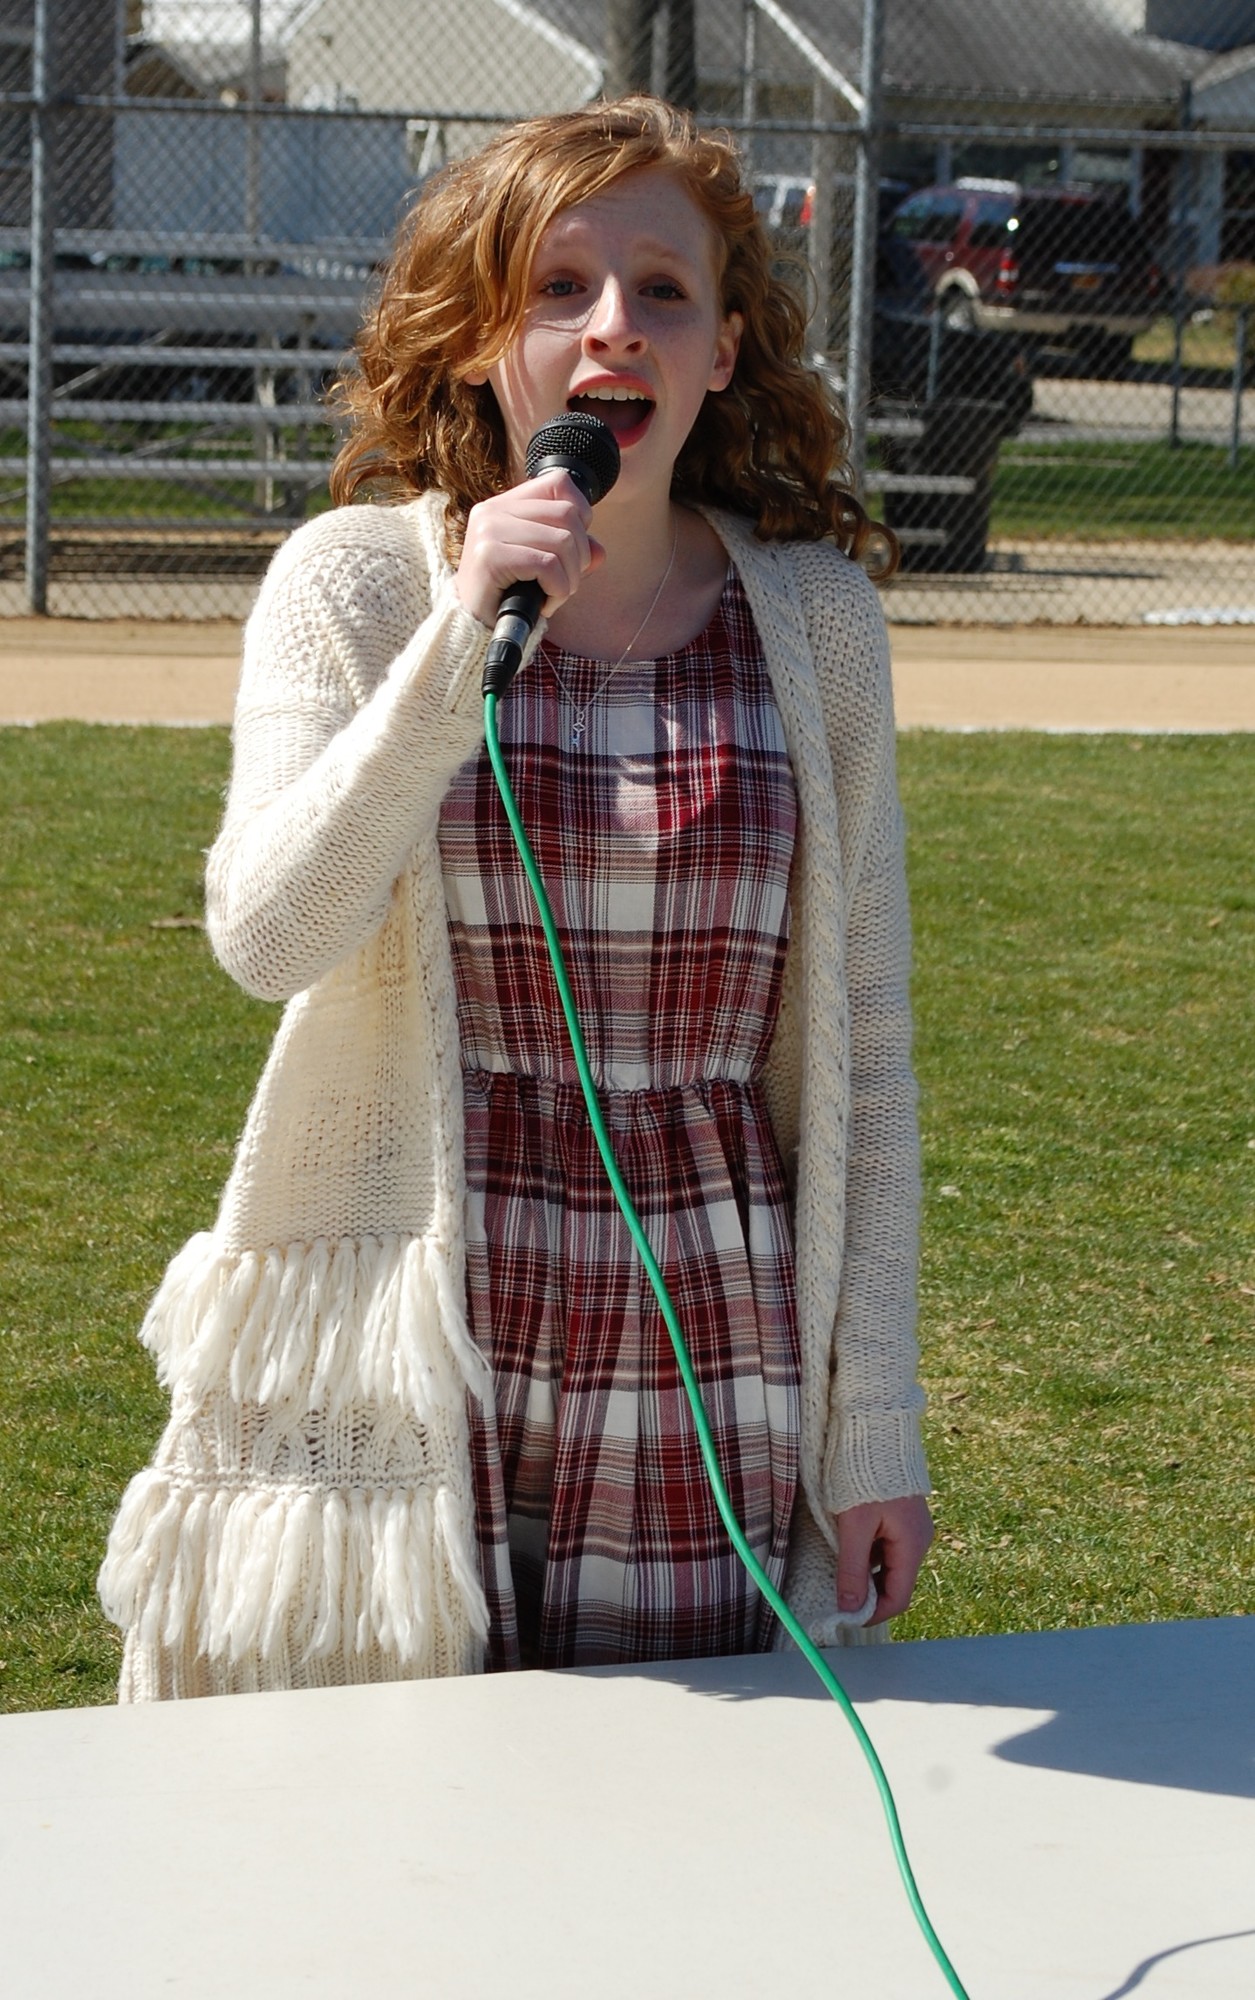 Wantagh High School student Lindsay Whiteman sang the National Anthem.